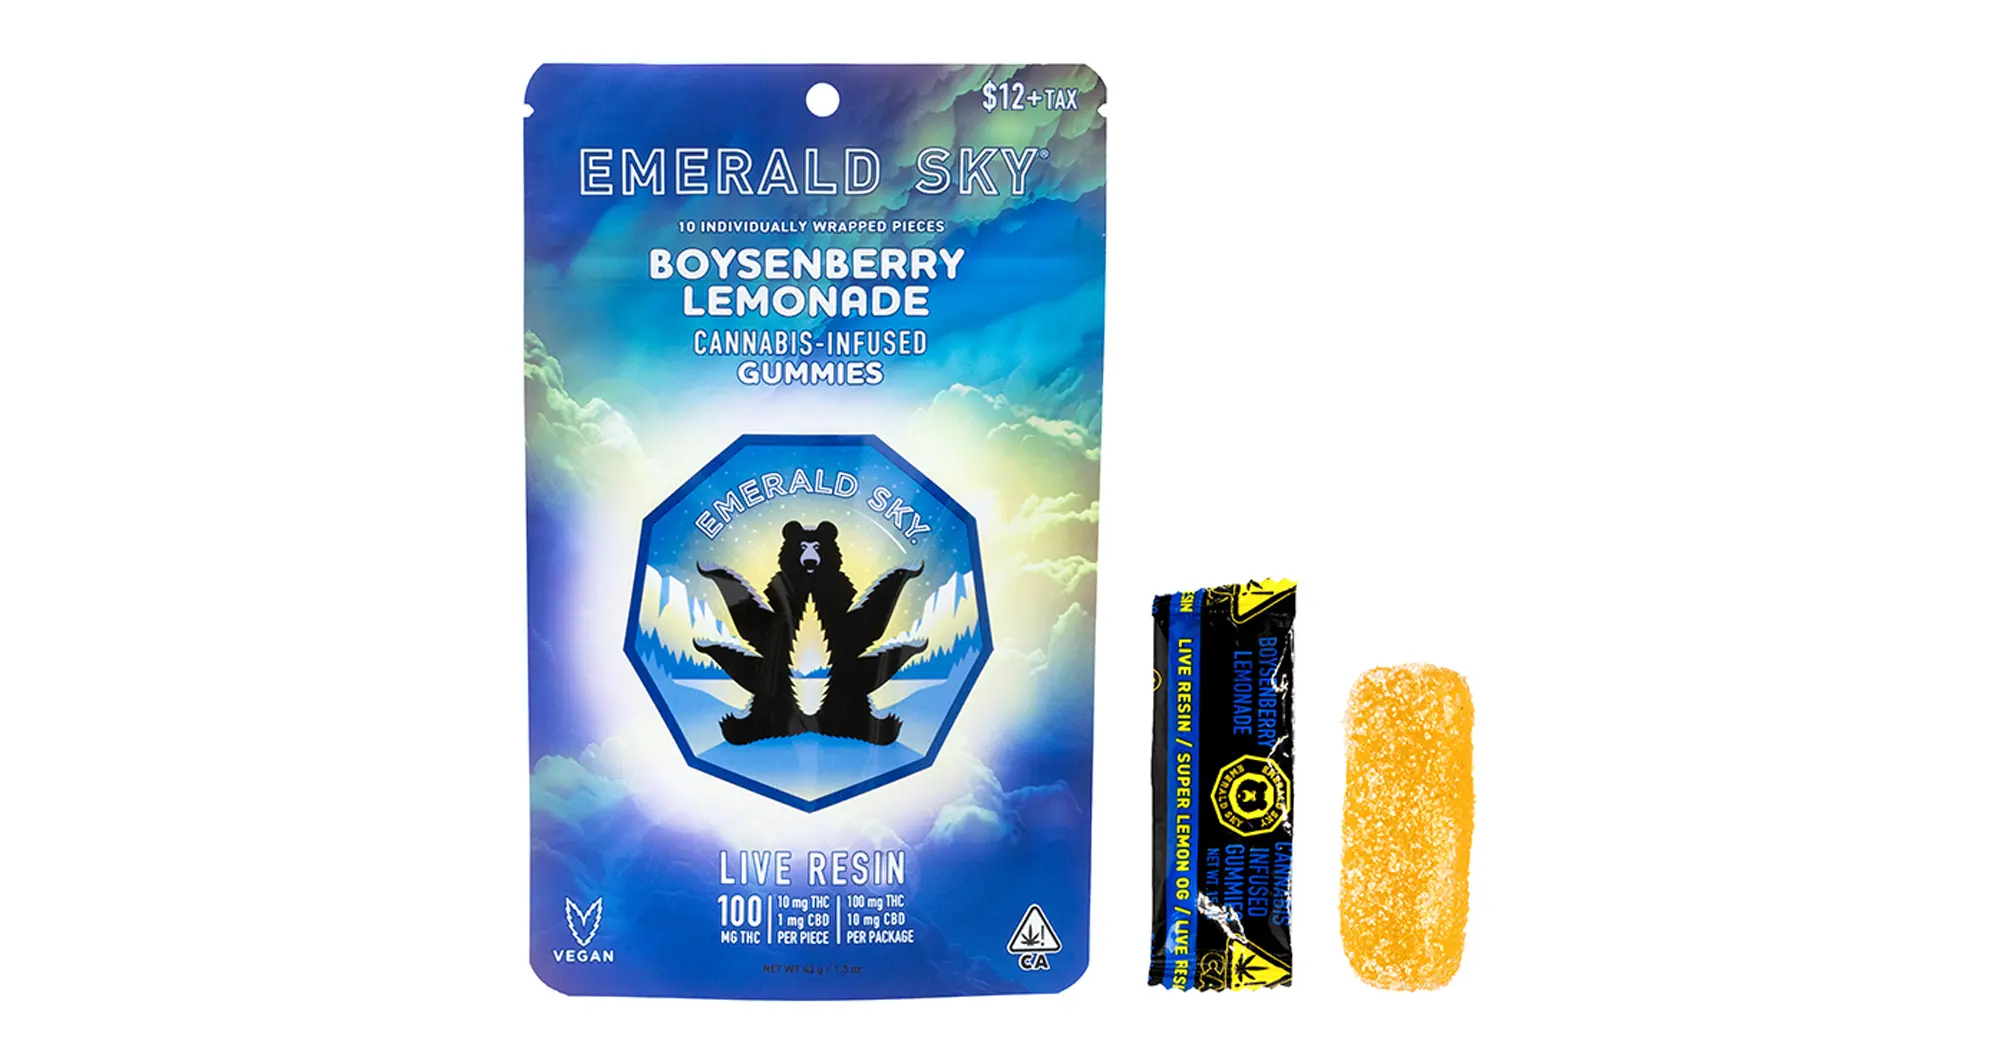 Boysenberry Lemonade 10:1 CBD Live Resin Gummies